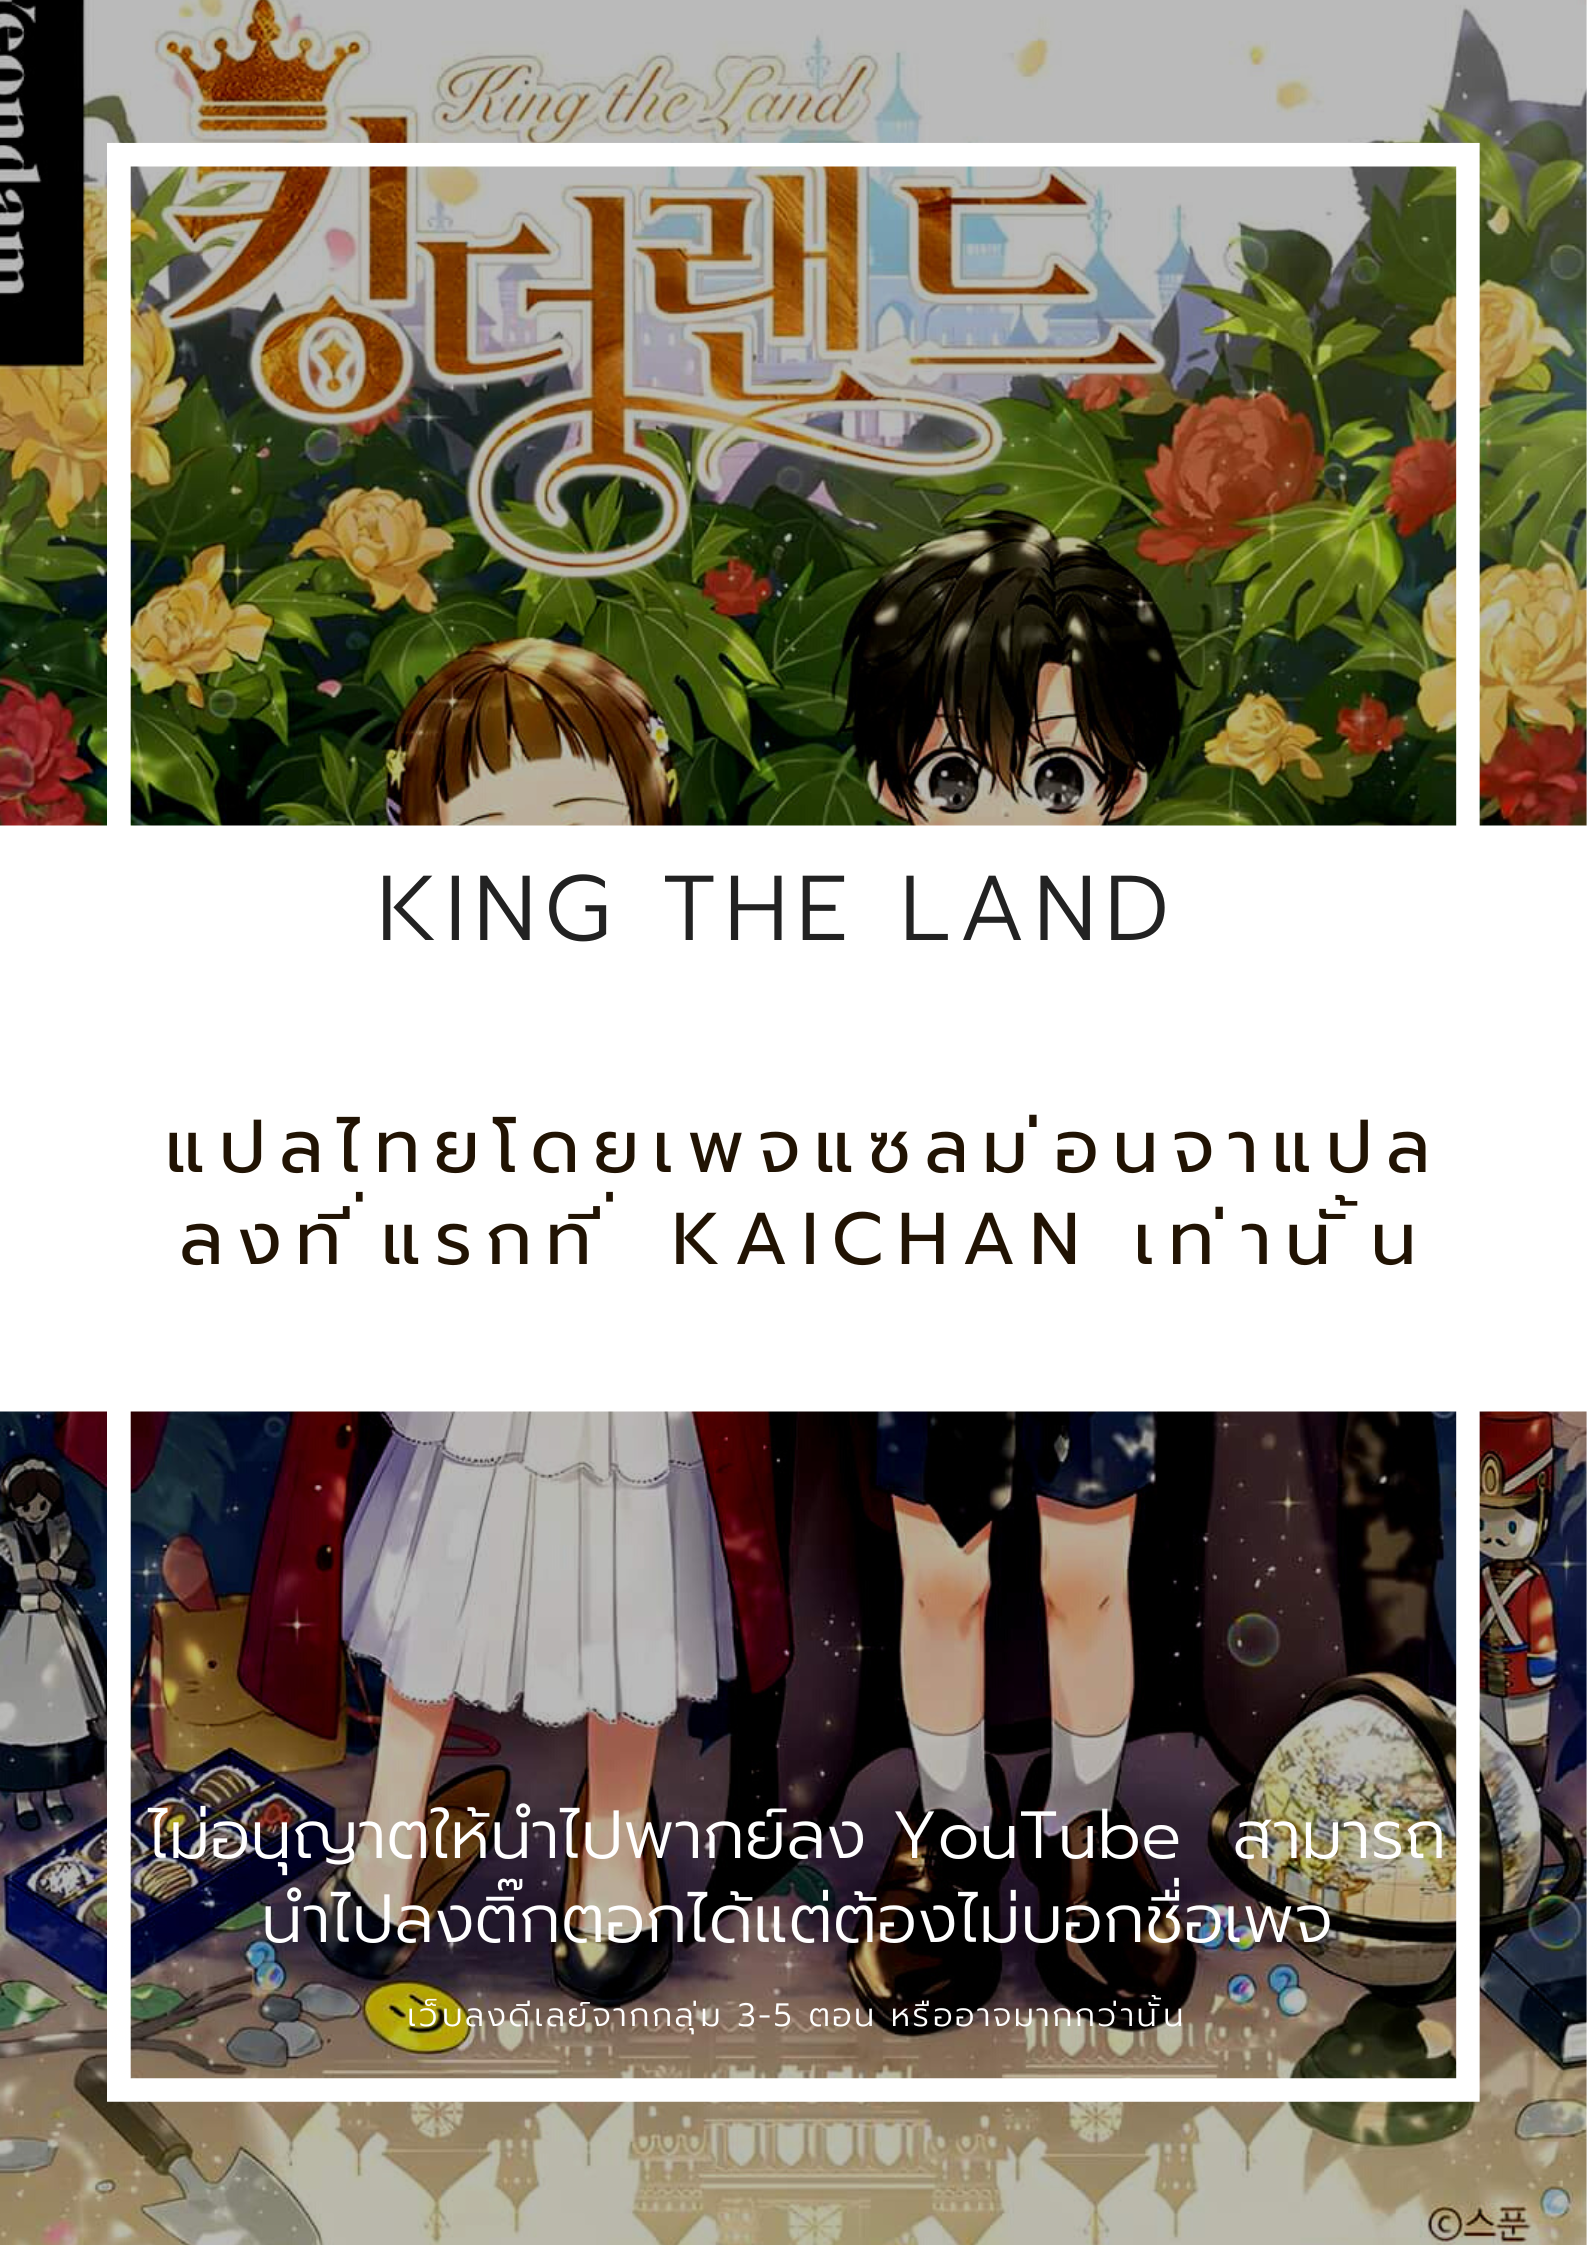 King the land ตอนที่ 5 (1)